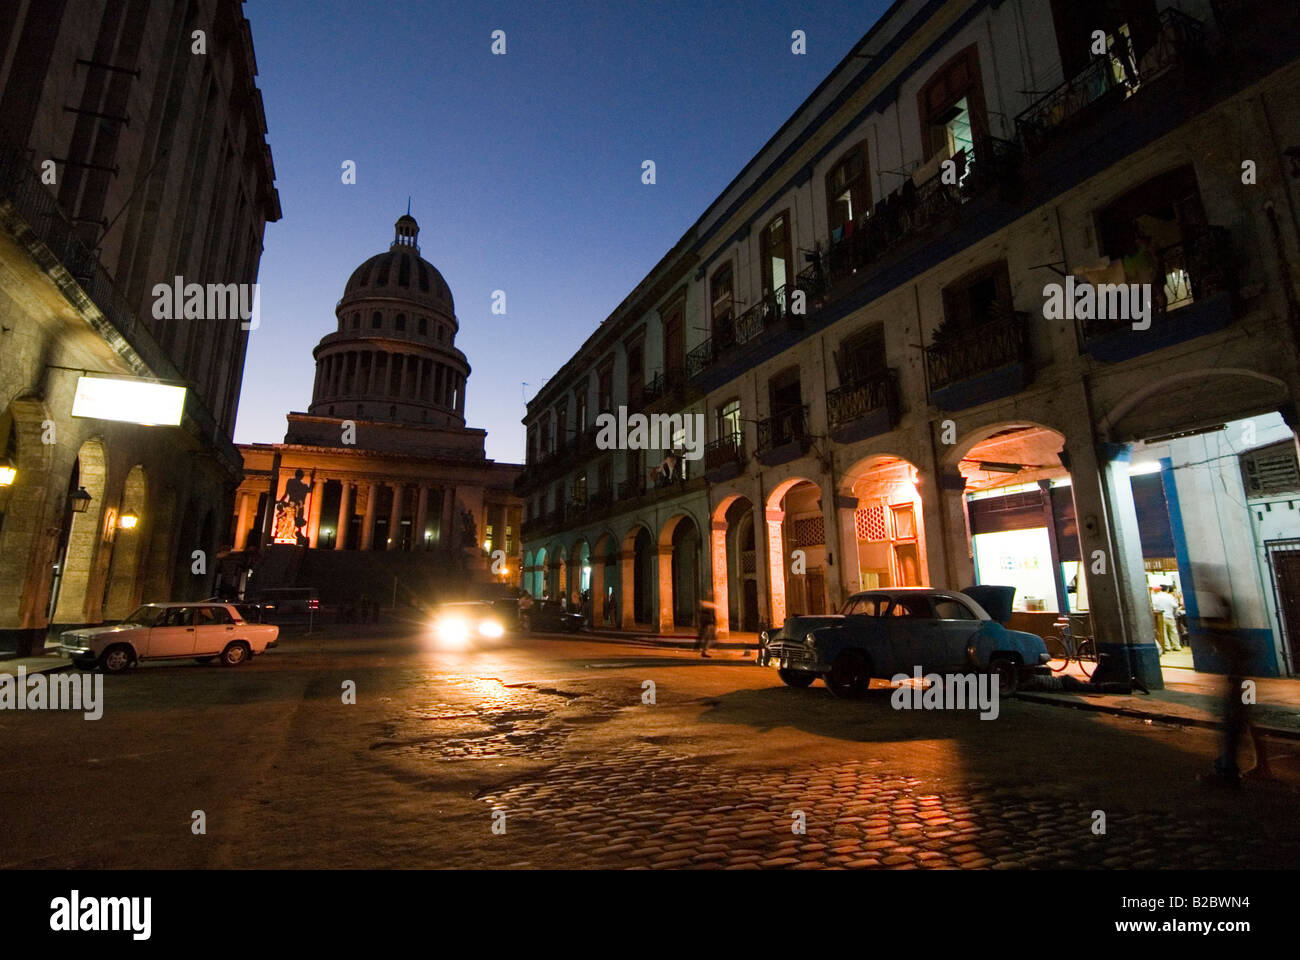 Dunklen heruntergekommenen Straße mit Blick auf die koloniale Capitolio Gebäude in La Habana Vieja Havanna Kuba Stockfoto